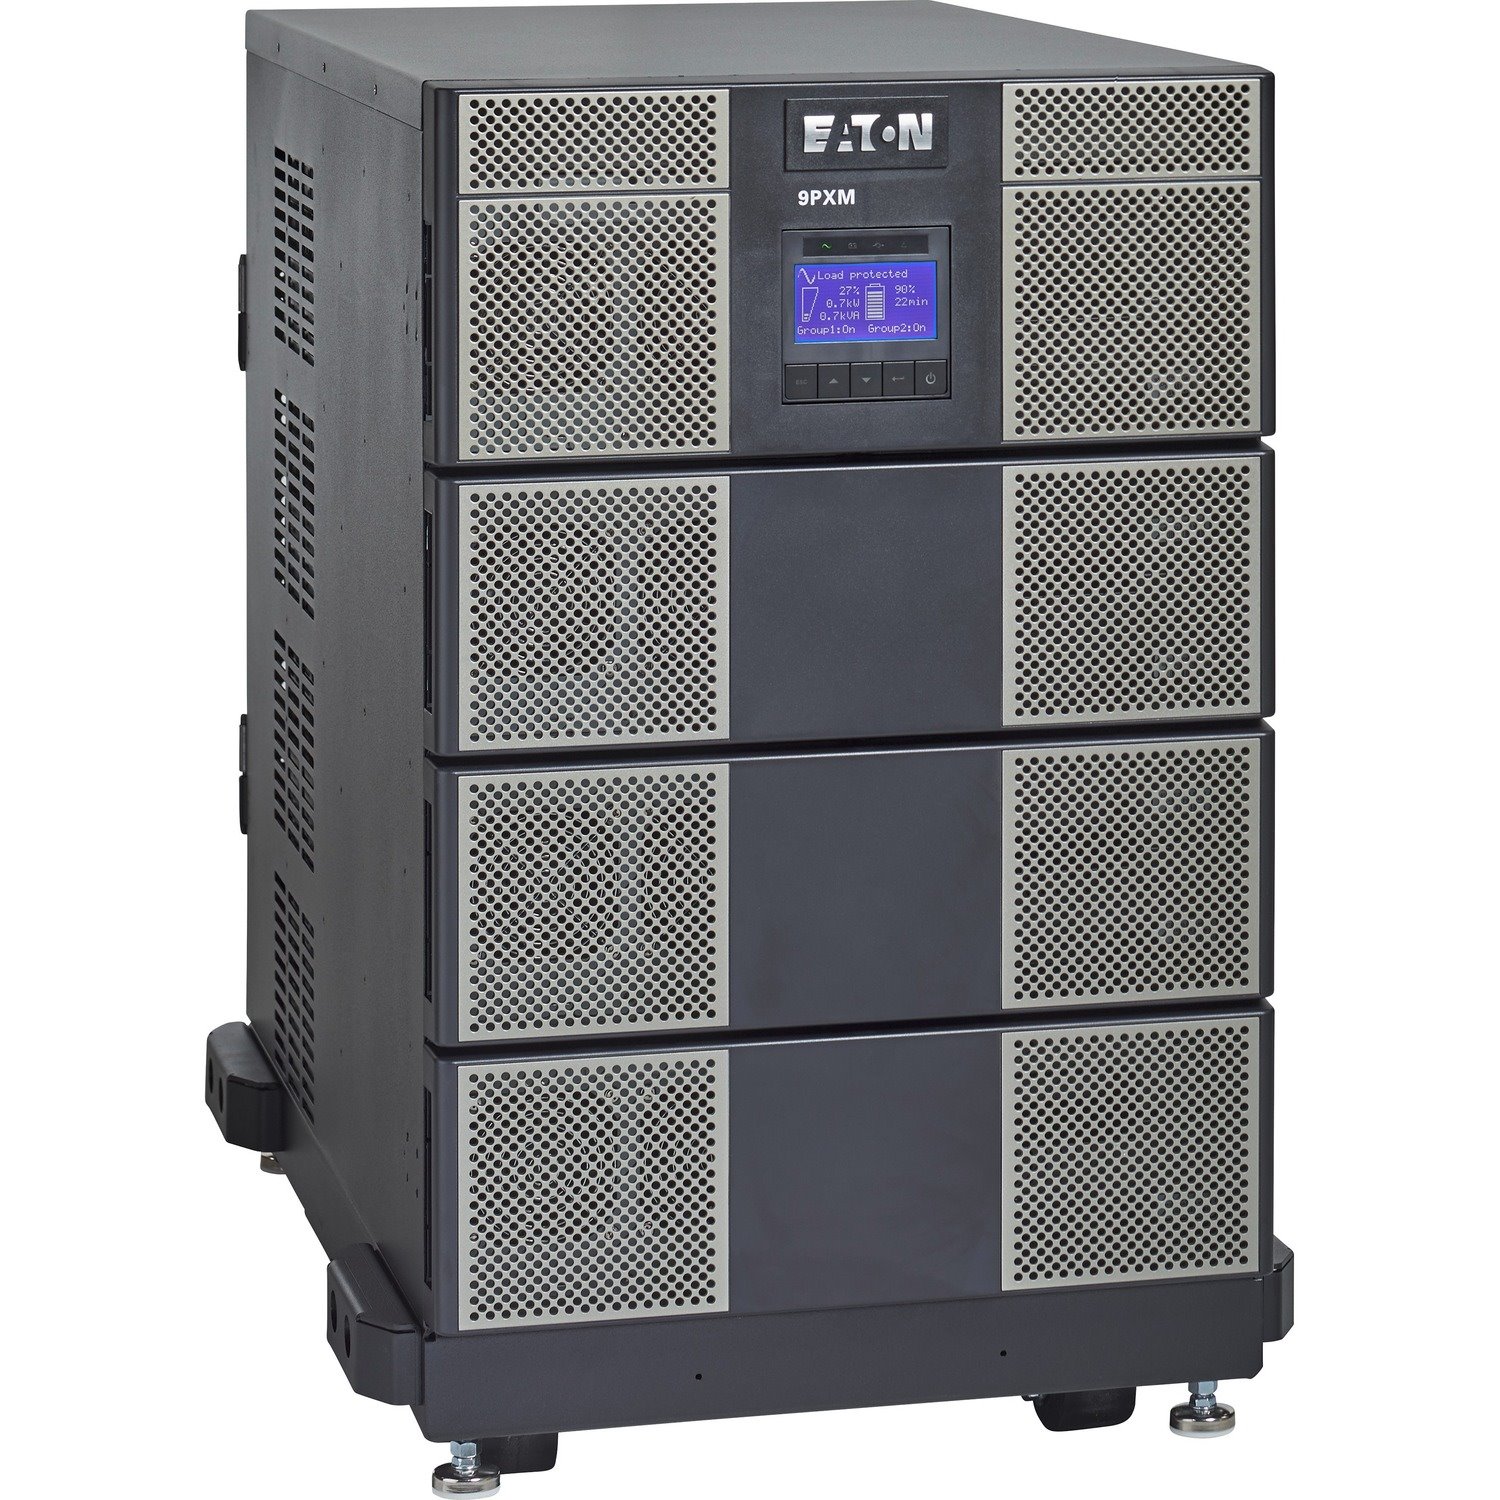 Eaton 9PXM UPS, 16kVA scaleable to 16kVA, Hardwired input, Receptacle Output, 208-240V, Rack/Tower, 14U